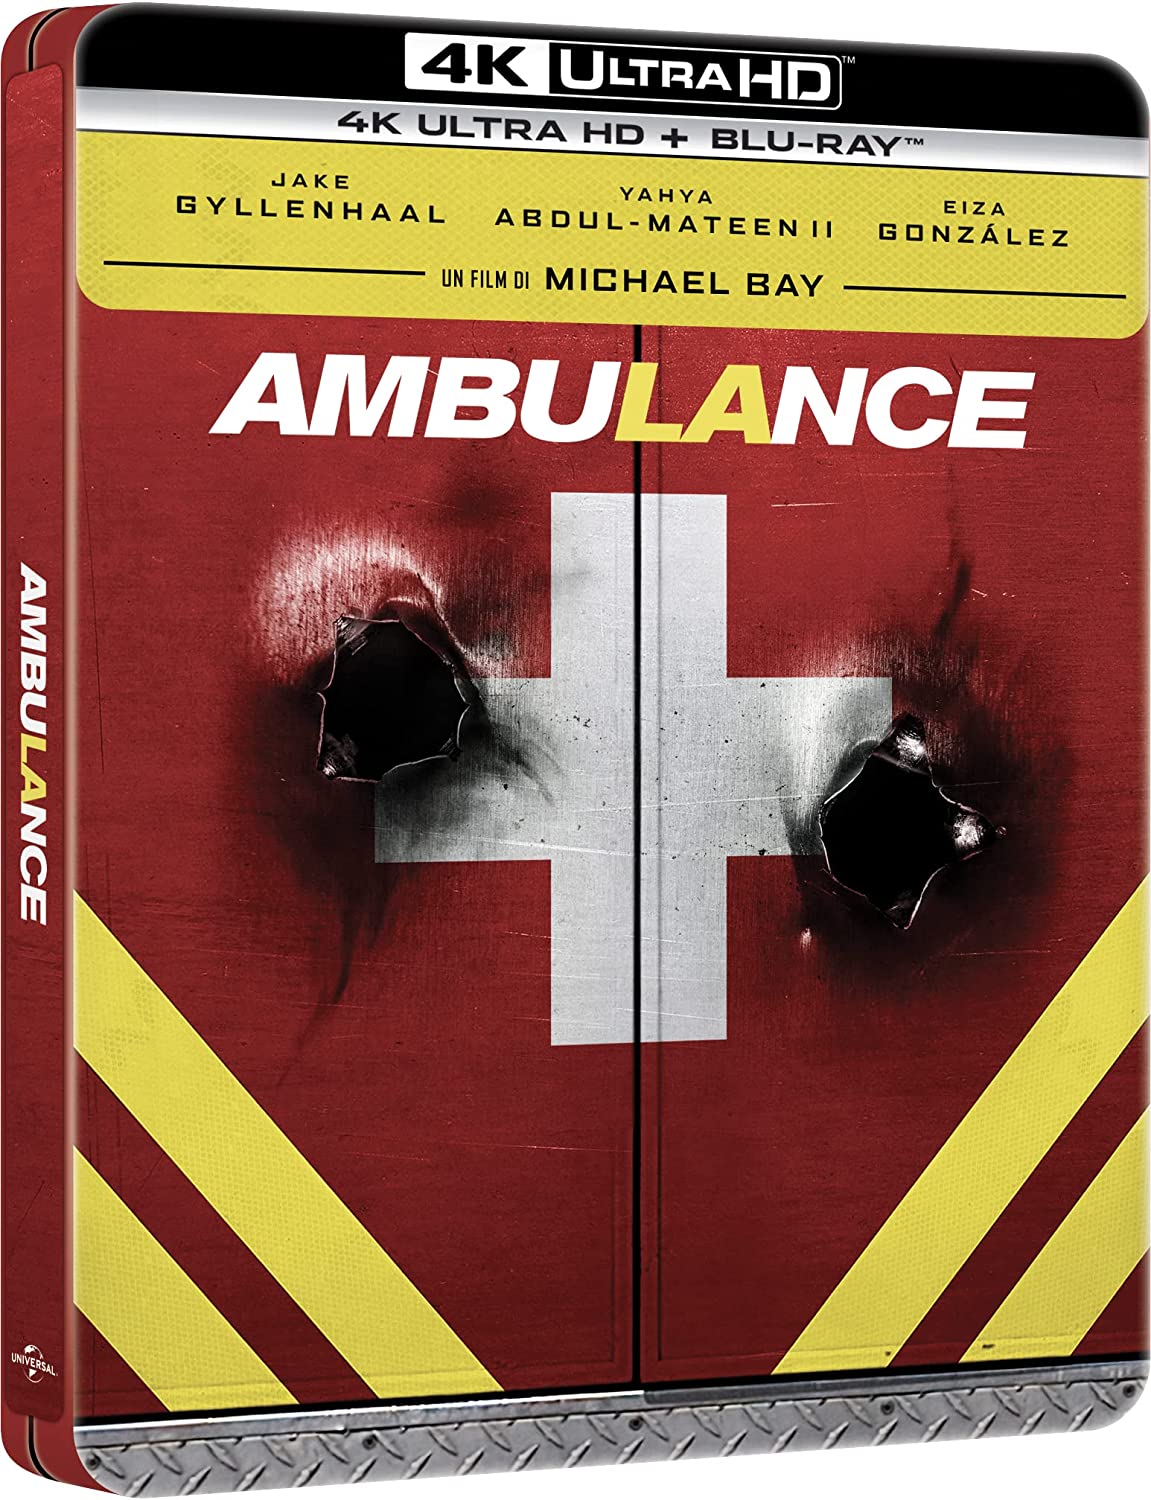 Ambulance - 4K Ultra HD Blu-ray Steelbook